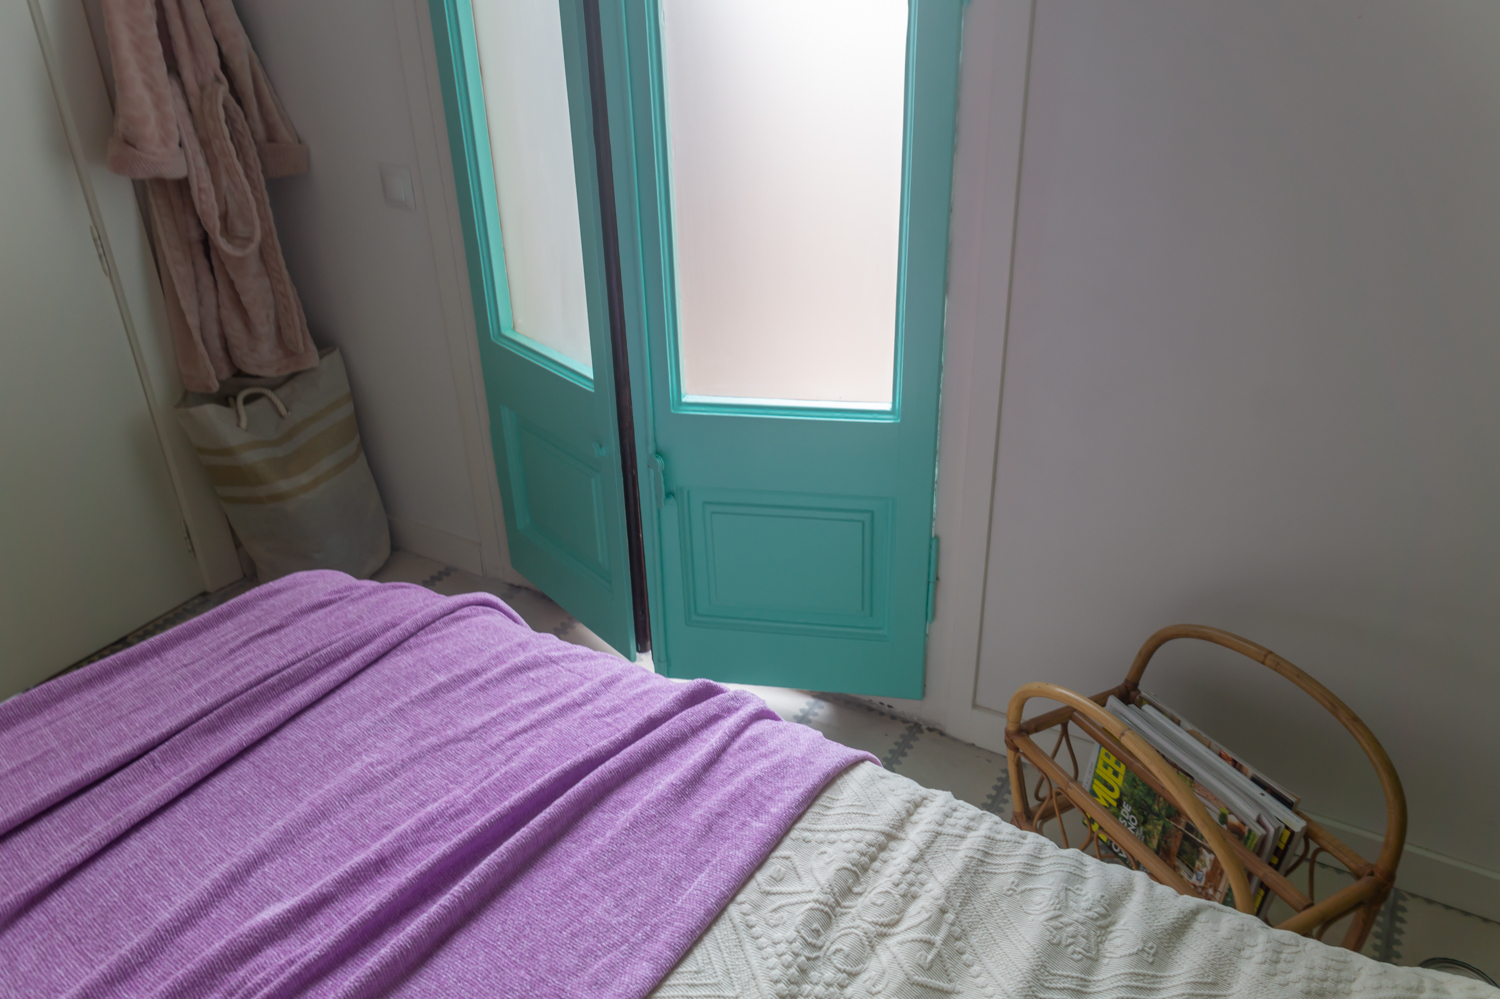 Bedroom balcony doors painted turquoise: tutorial